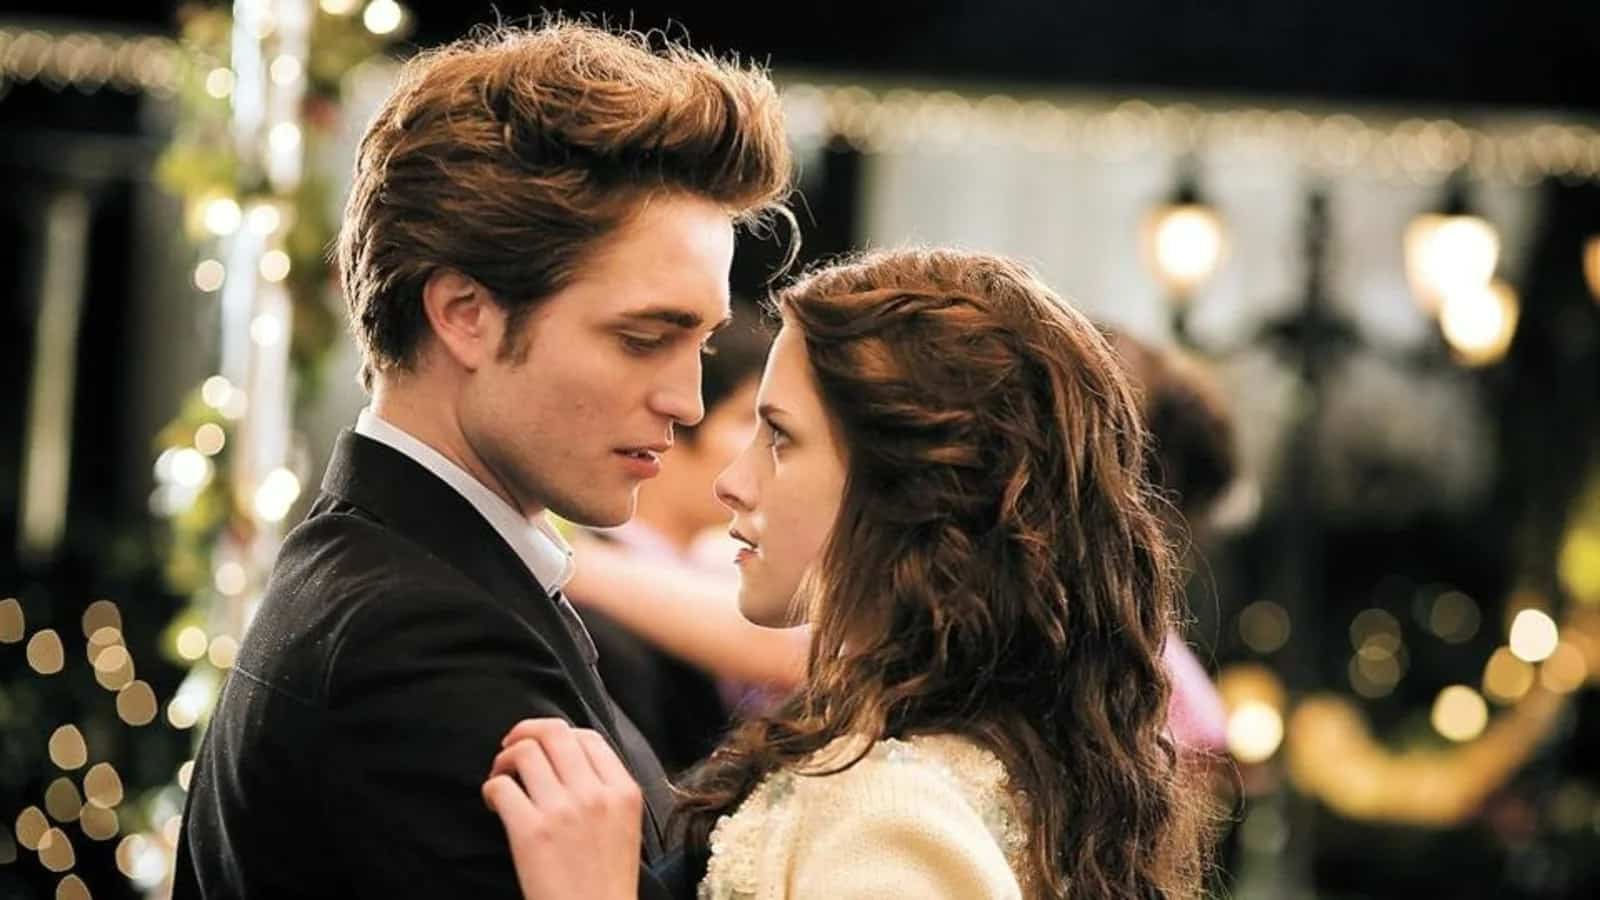 Kristen Stewart and Robert Pattison dancing in a gazebo in Twilight